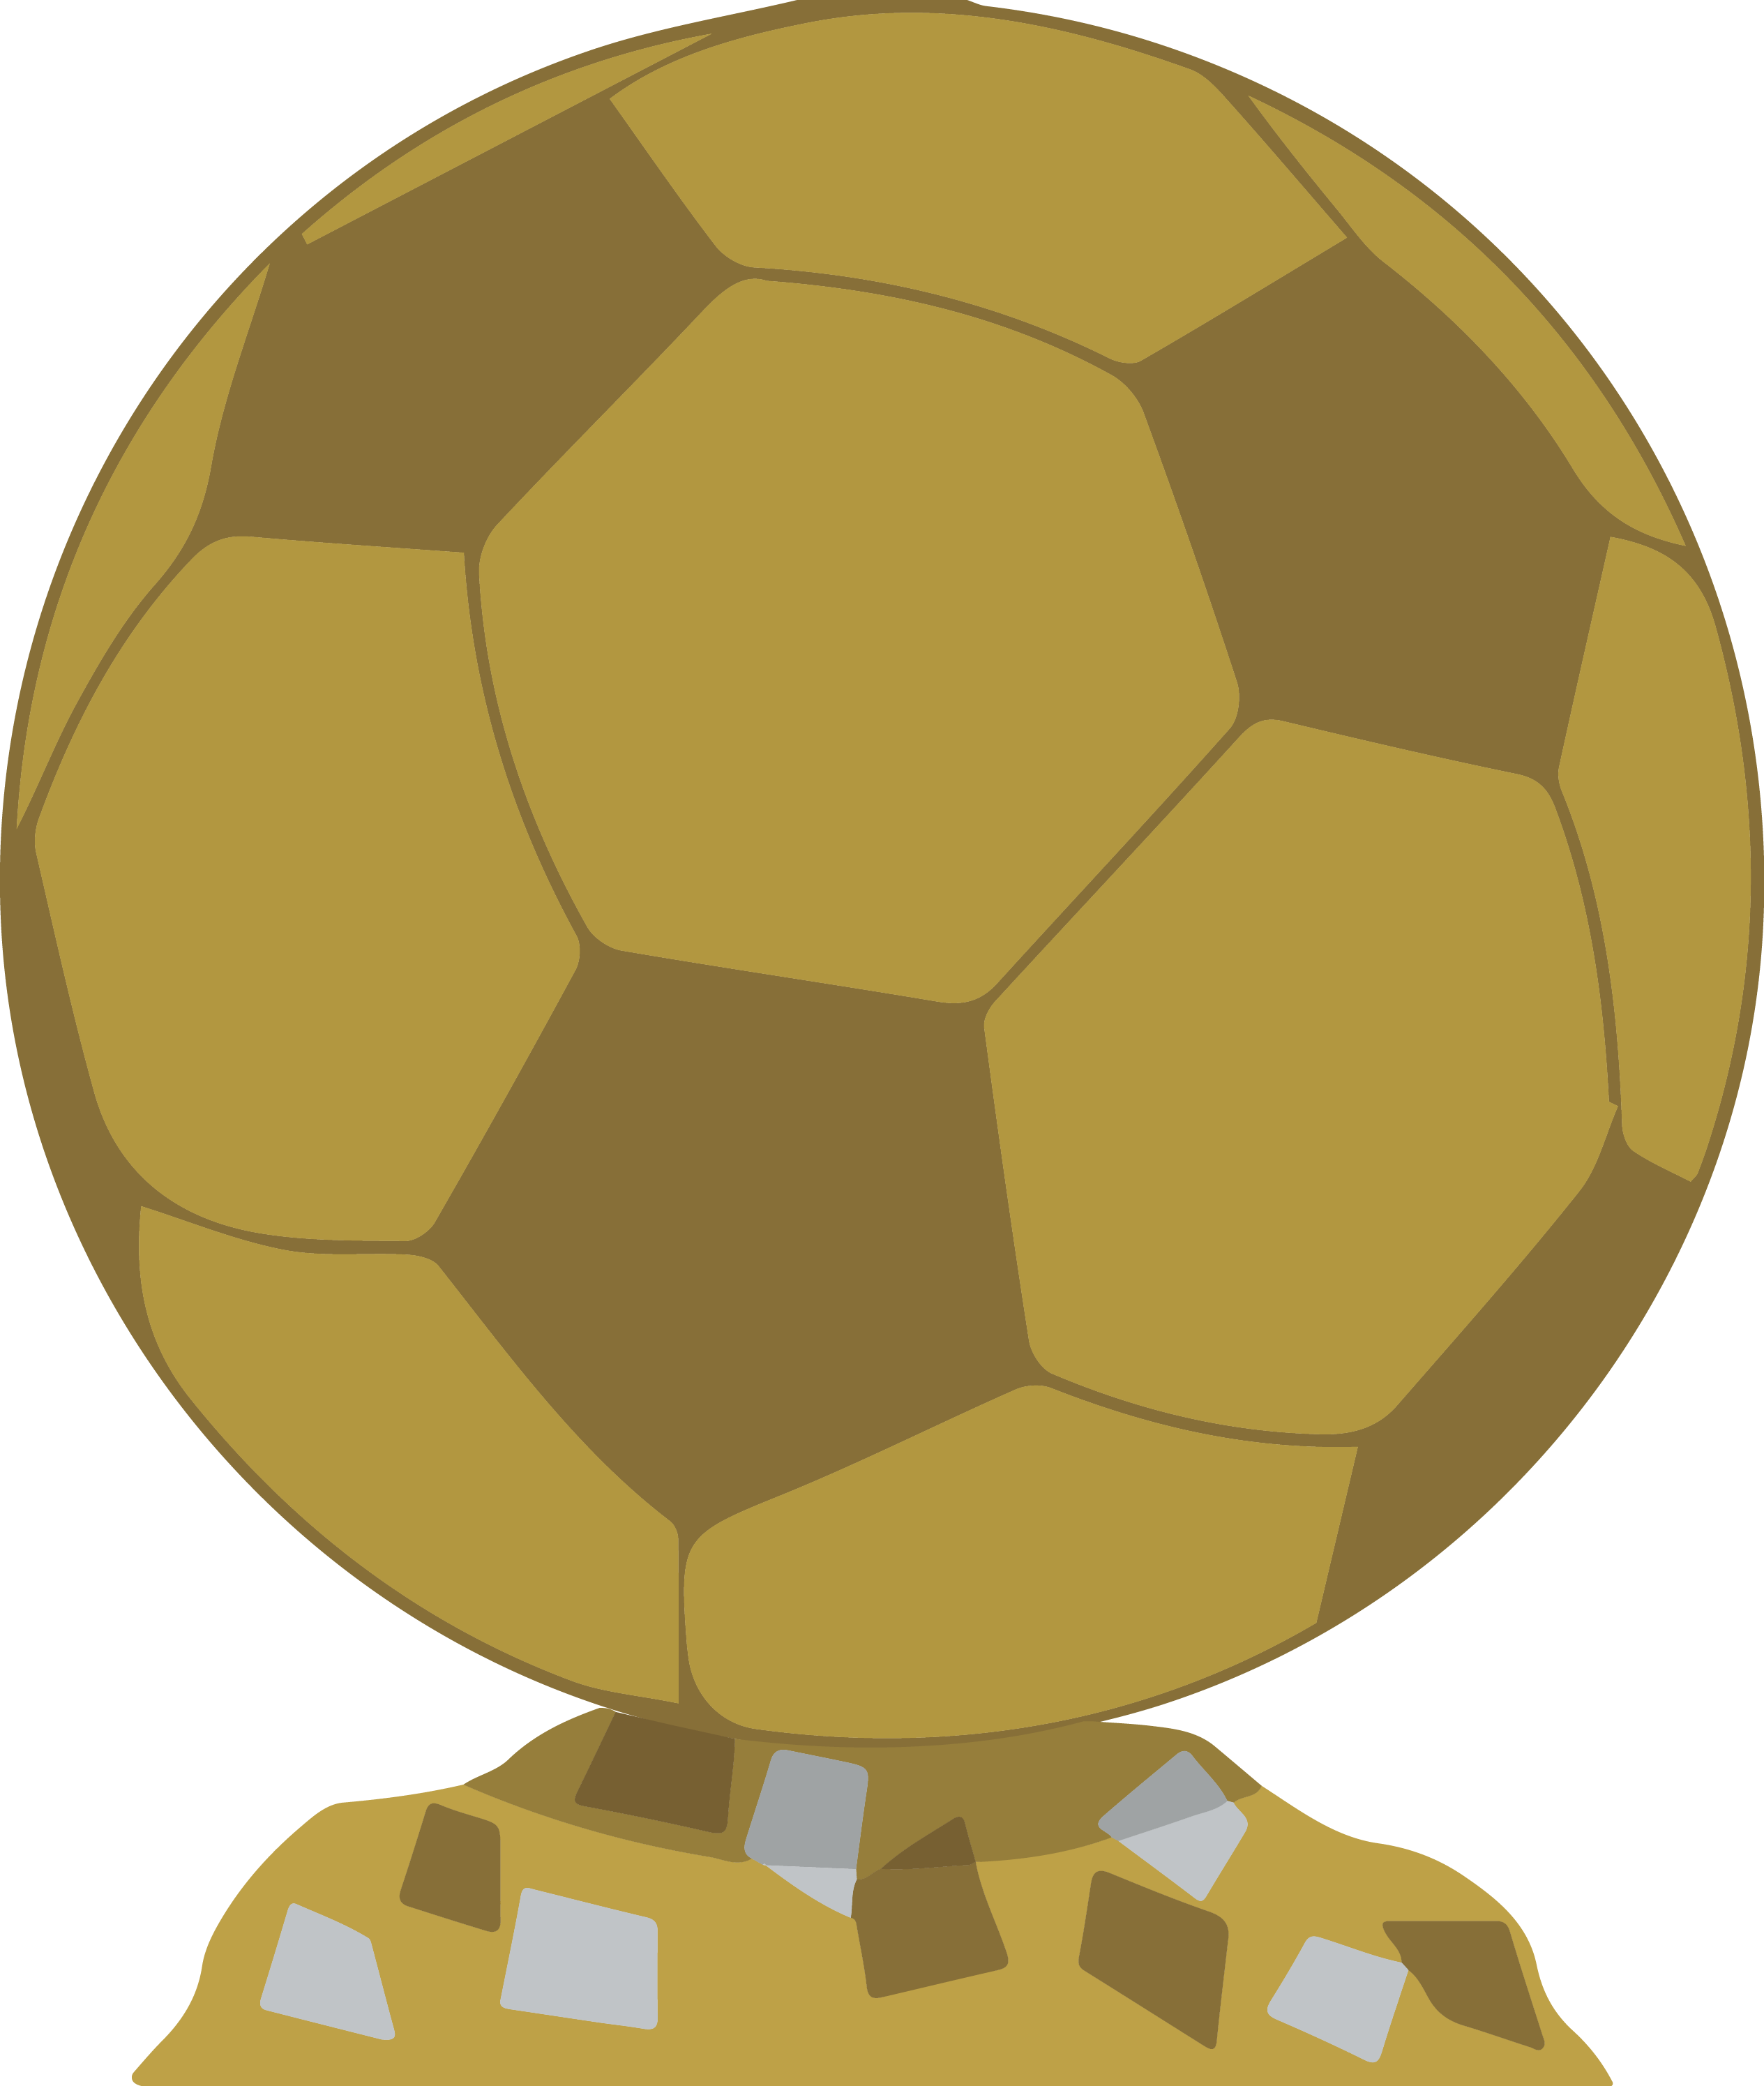 File:Mejor Jugador de la Copa del Mundo Brasil 2014.png - Wikimedia Commons